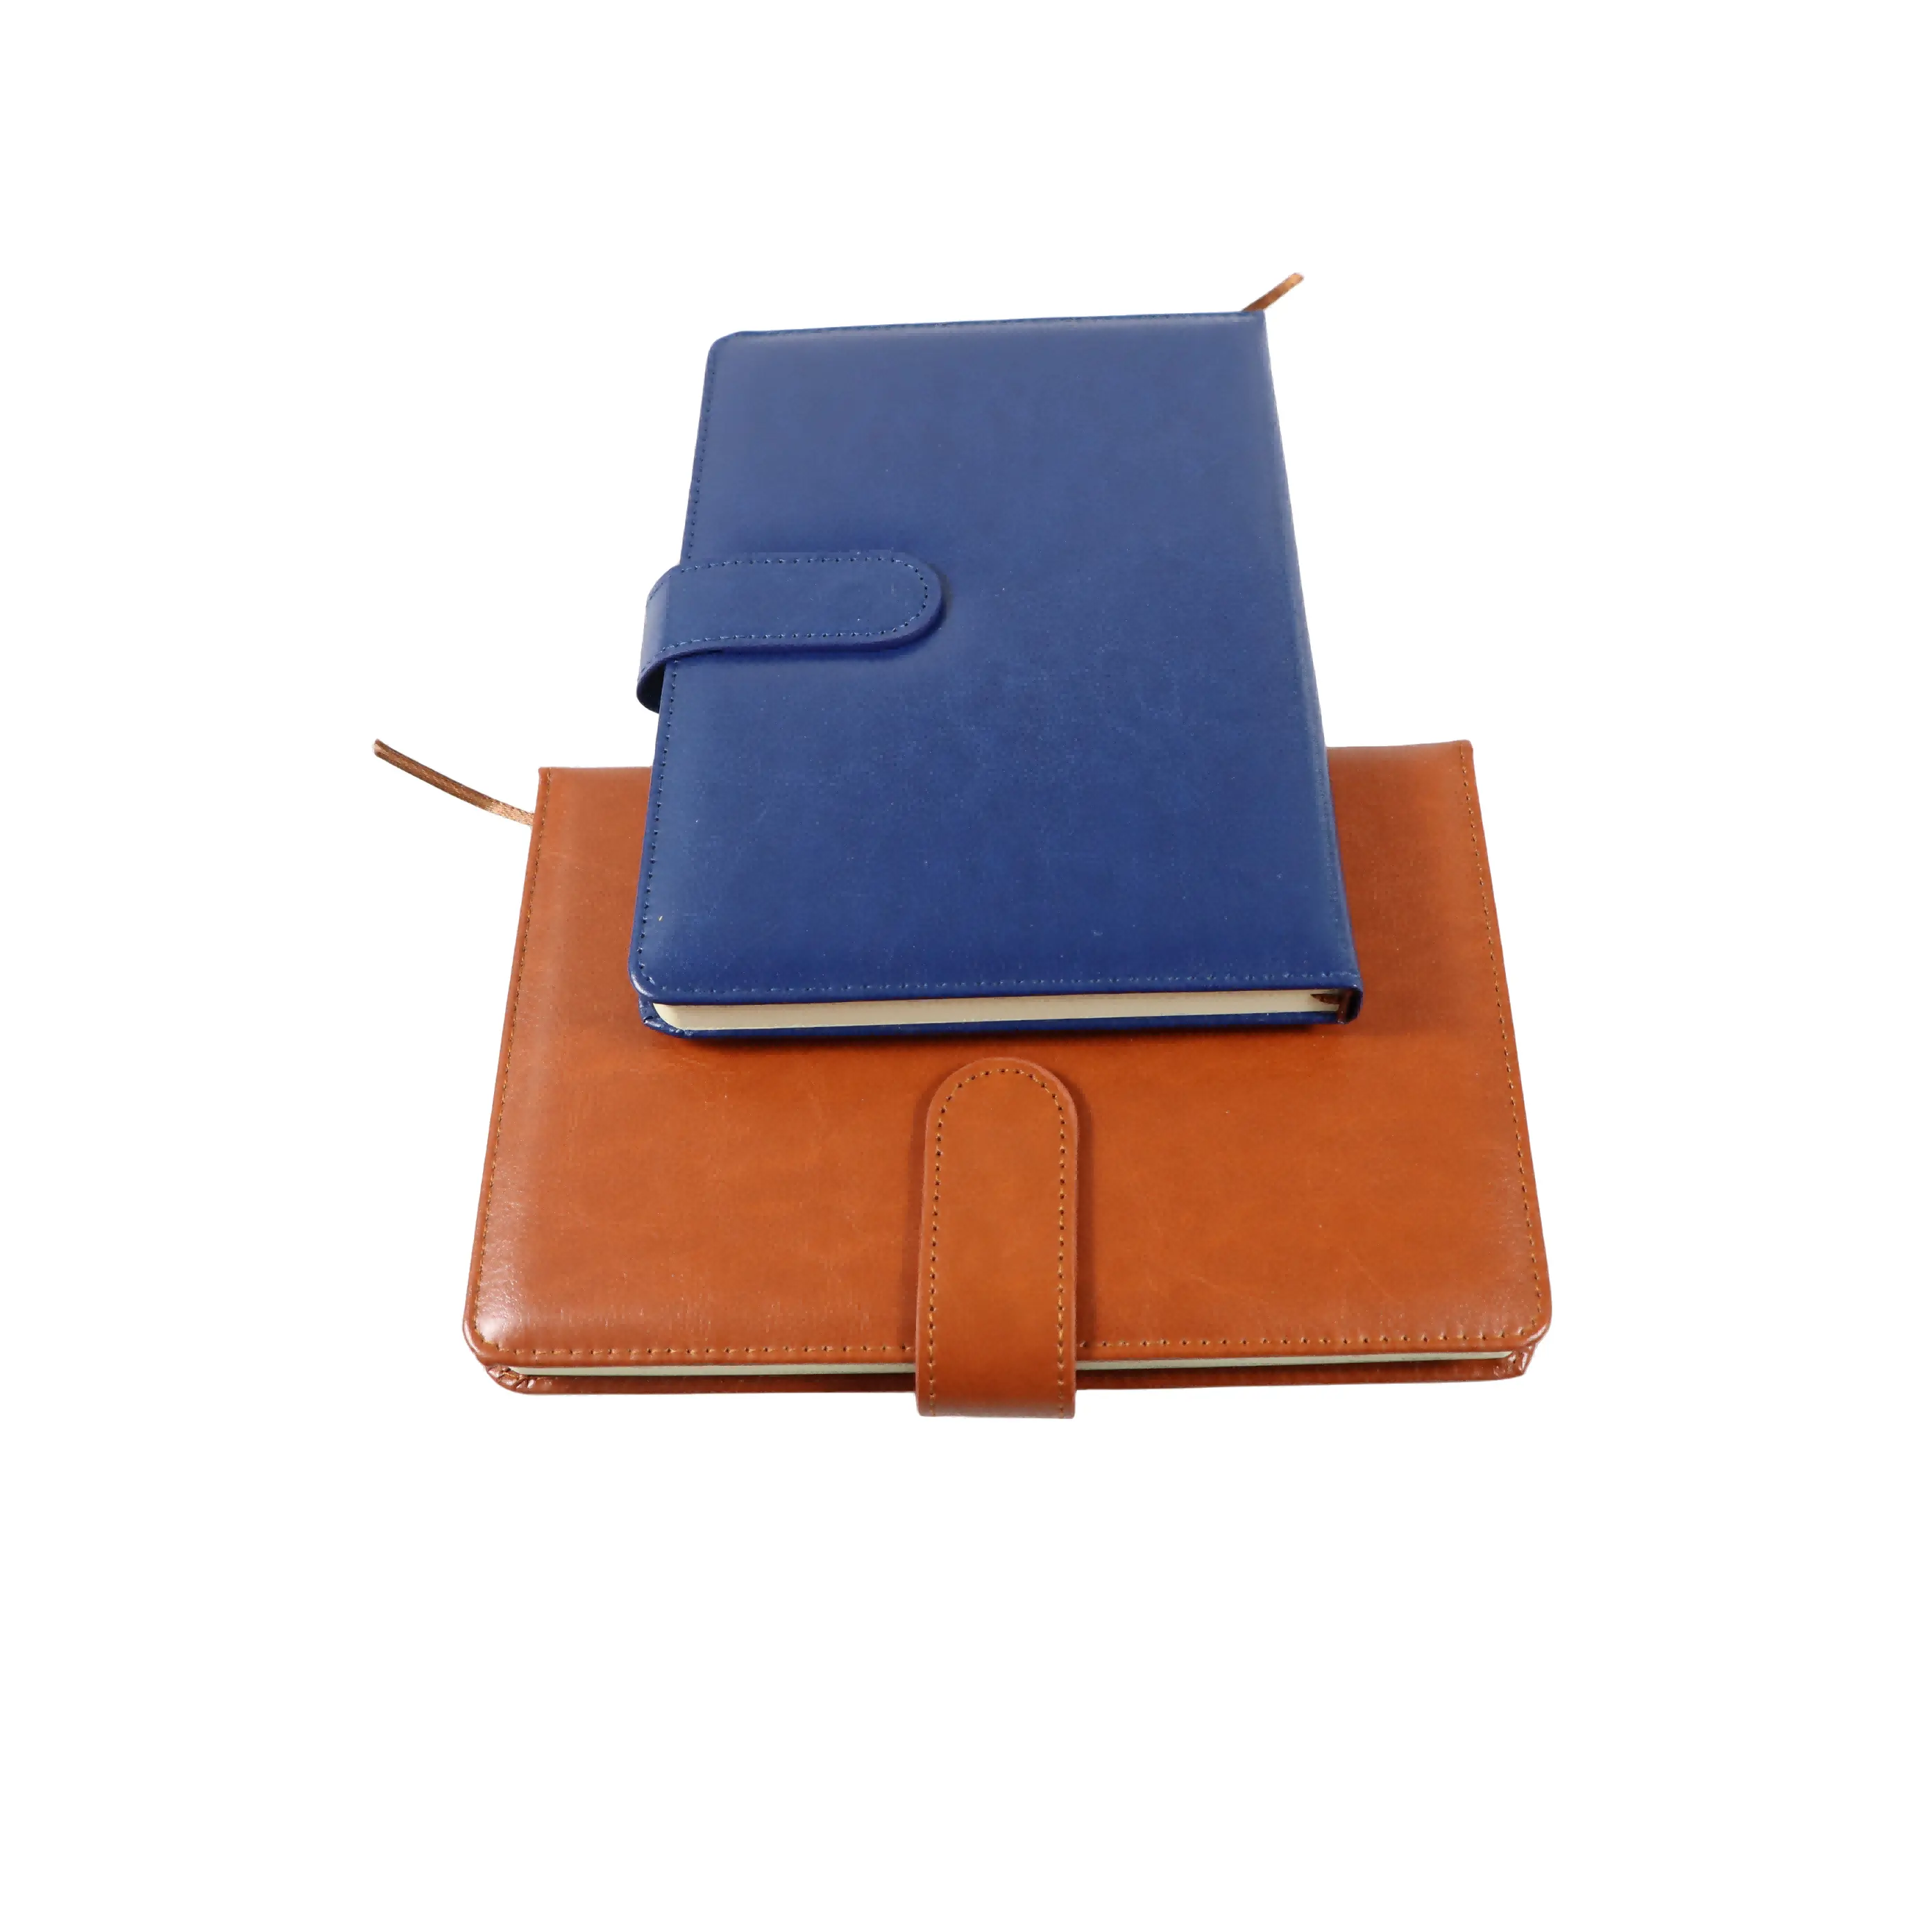 Notebook Logo kustom Notebook Hardcover B5 A5 A6 Pu hadiah Logo buku rencana jurnal Notebook unik